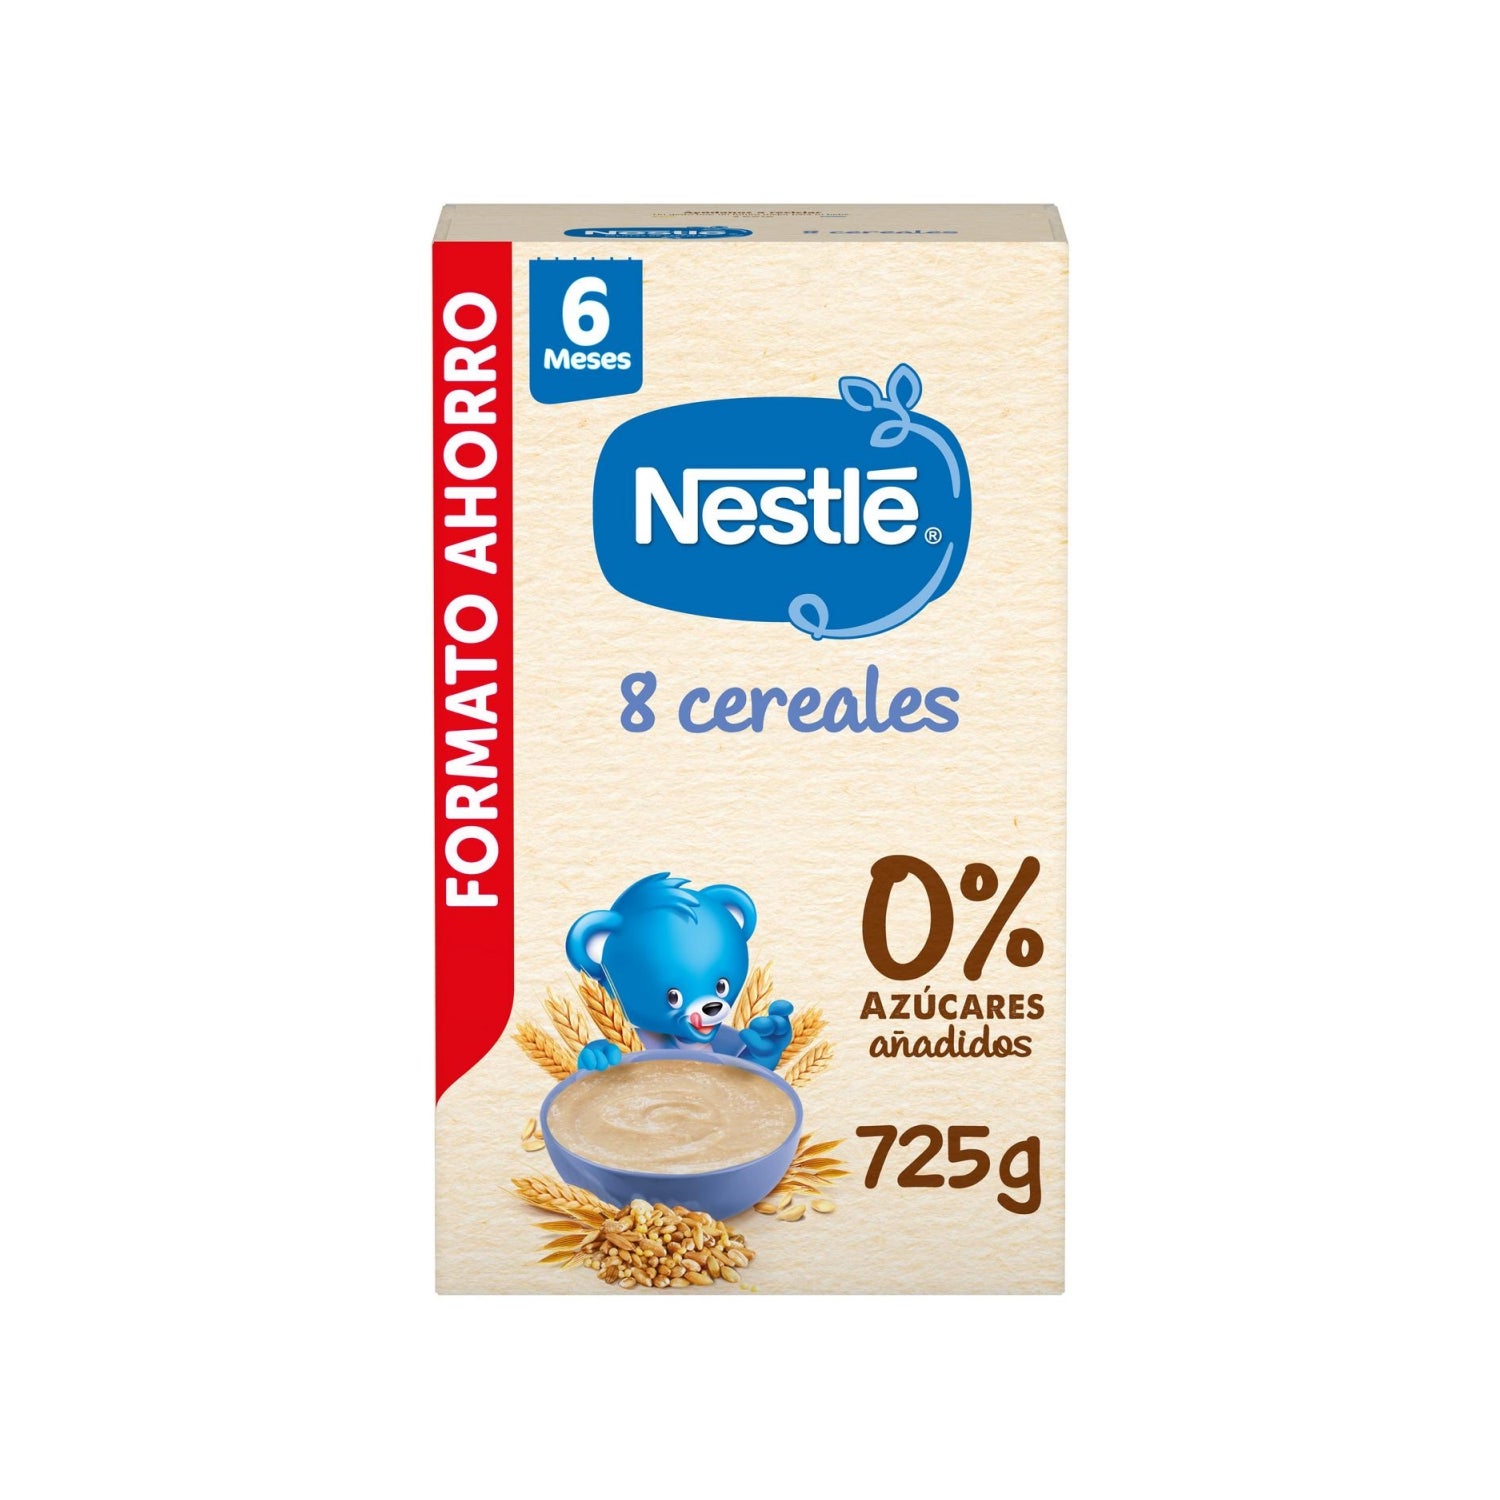 Nestlé papilla 8 cereales 725g